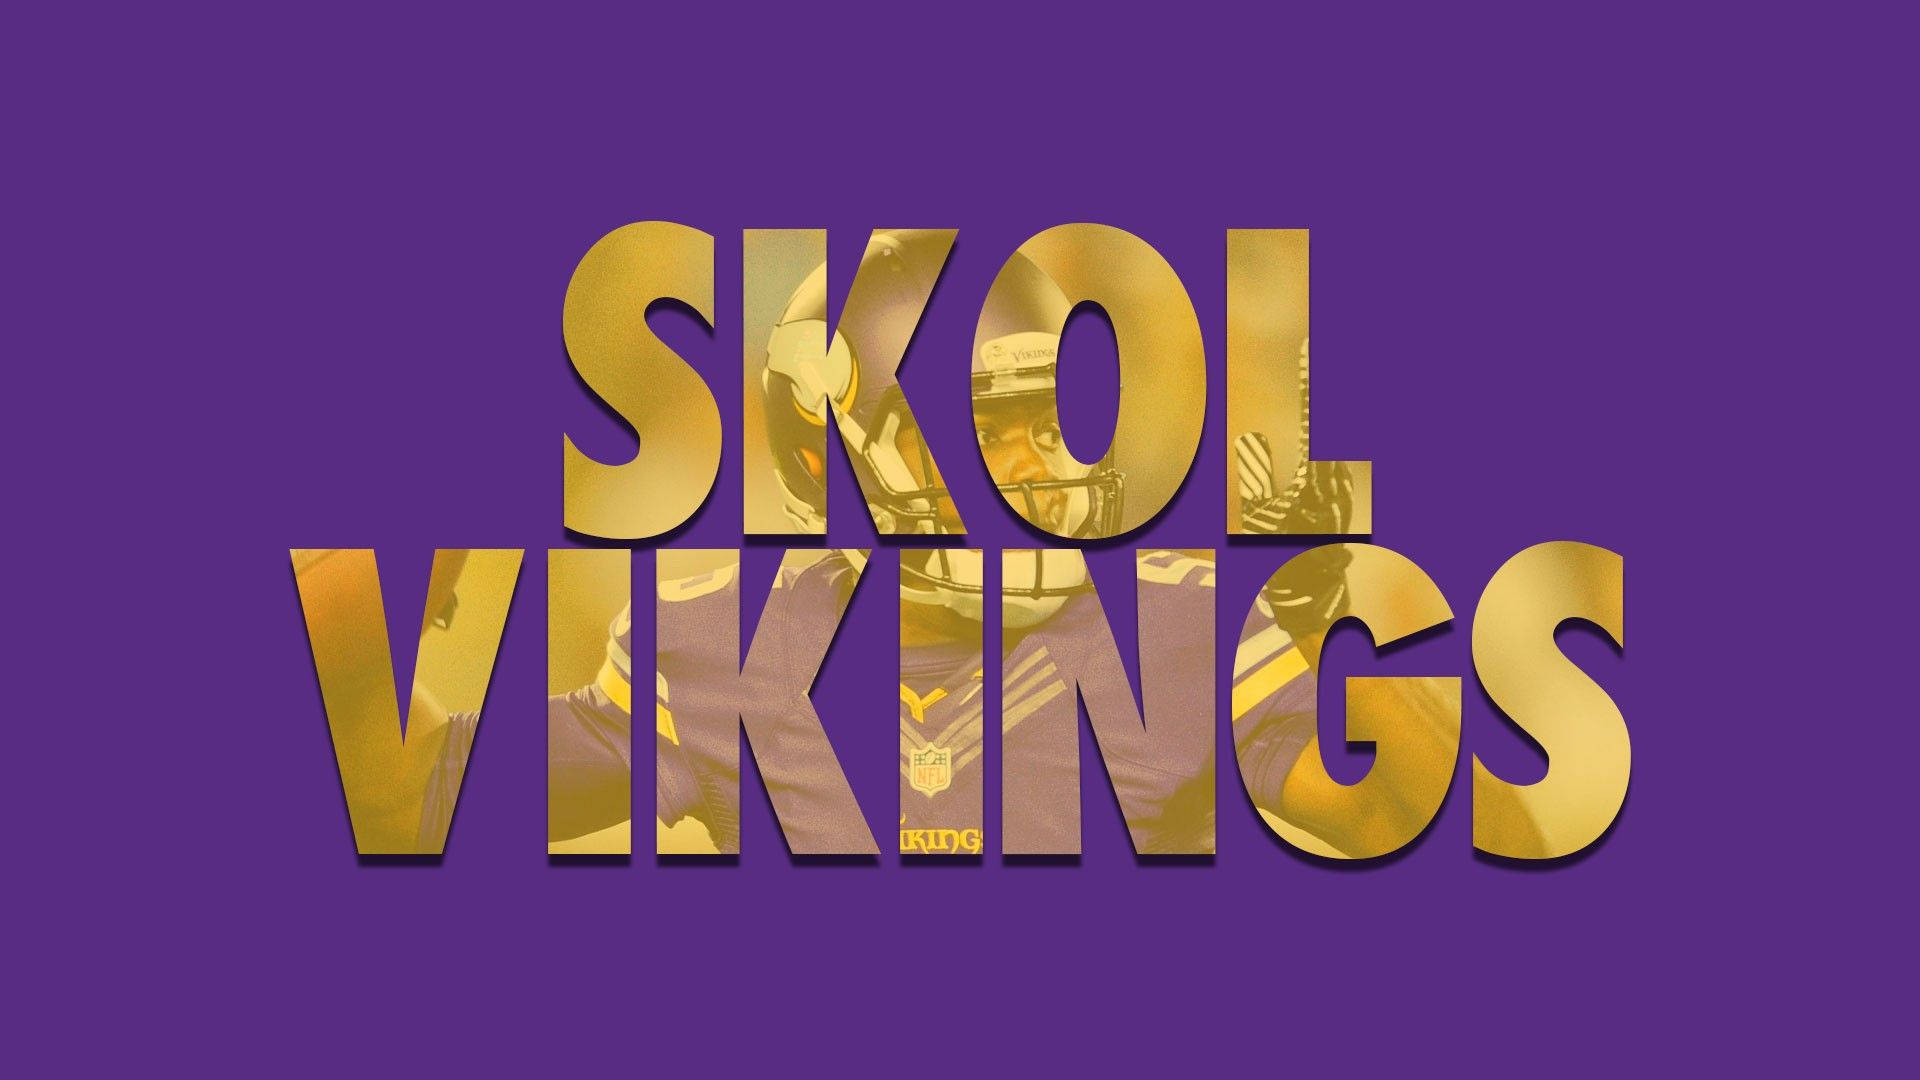 Minnesota Vikings Skol 2019 Wallpaper